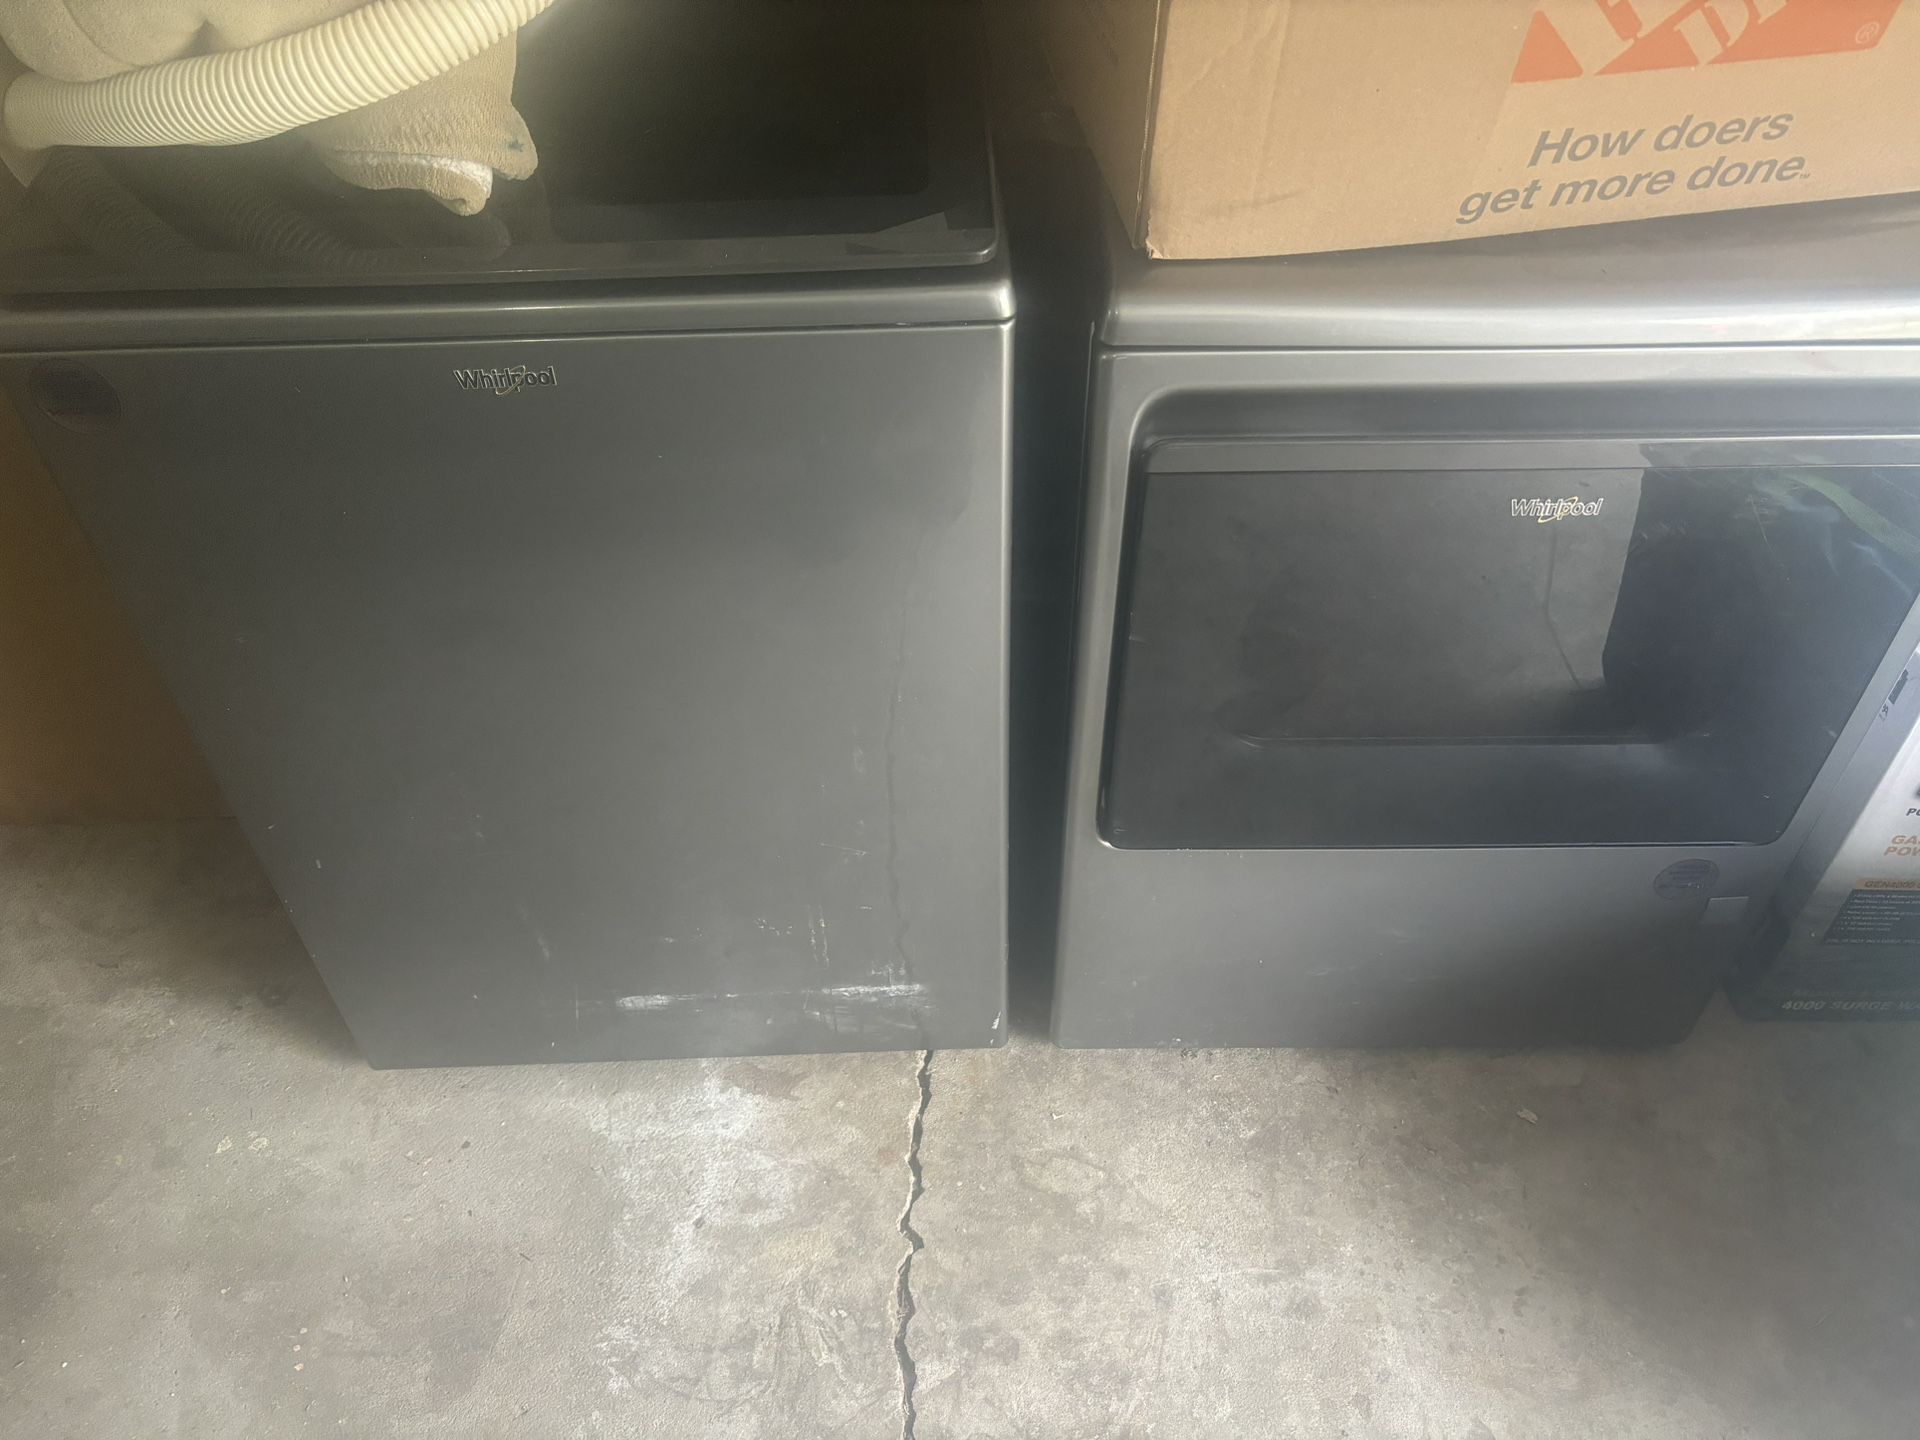 Samesung Washer And Dryer